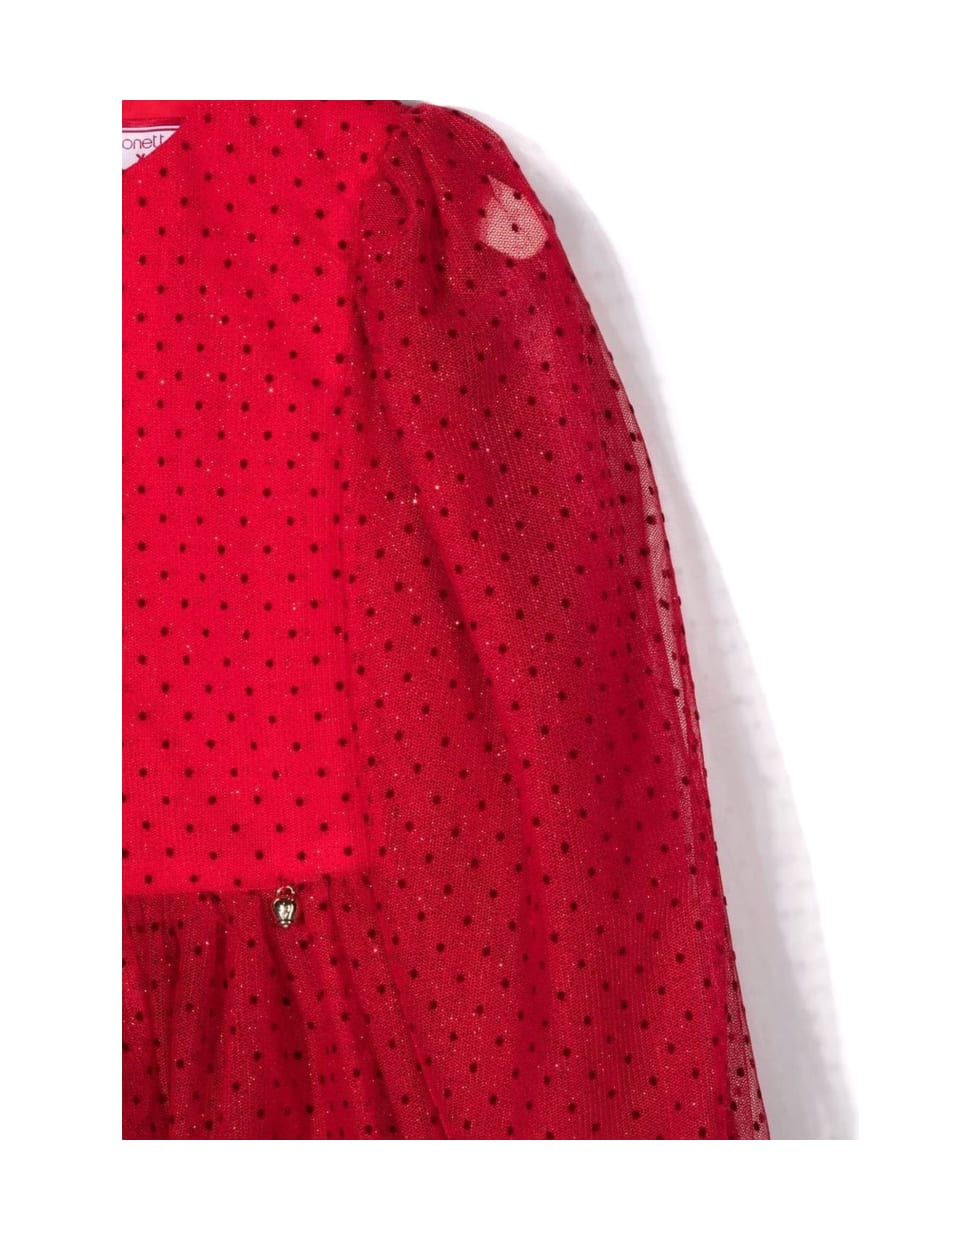 Simonetta Red Cotton Dress - Rosso